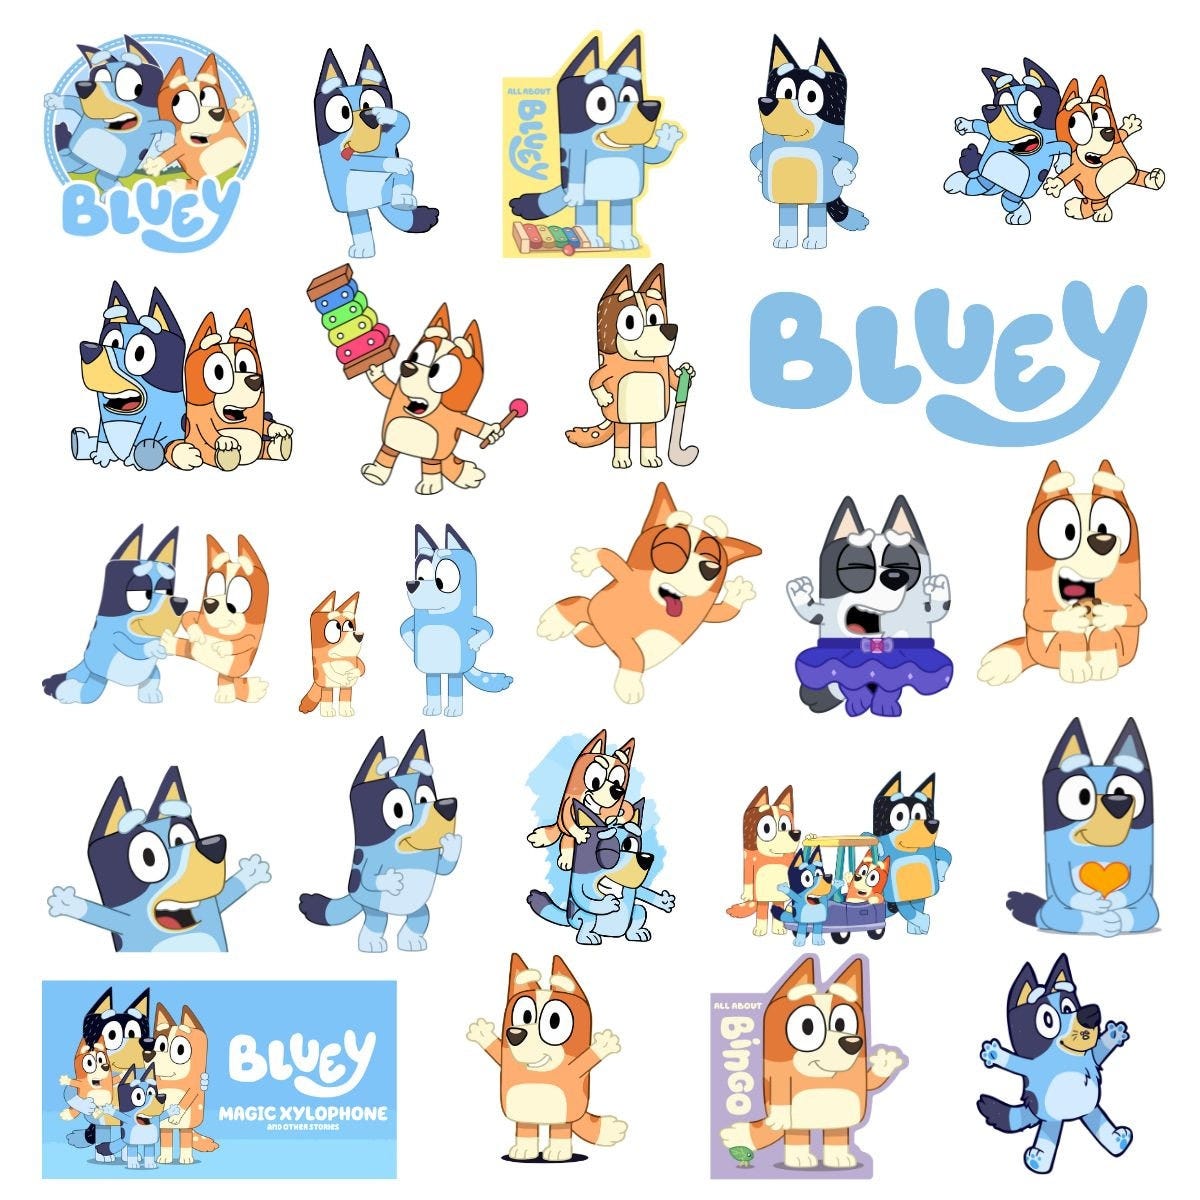 Blueyy png Files Set Bundle | Only Blueyy png | Blueyy Family Bundle | Blueyy and Bingoo png Cut Files | Blueyy Digital Download